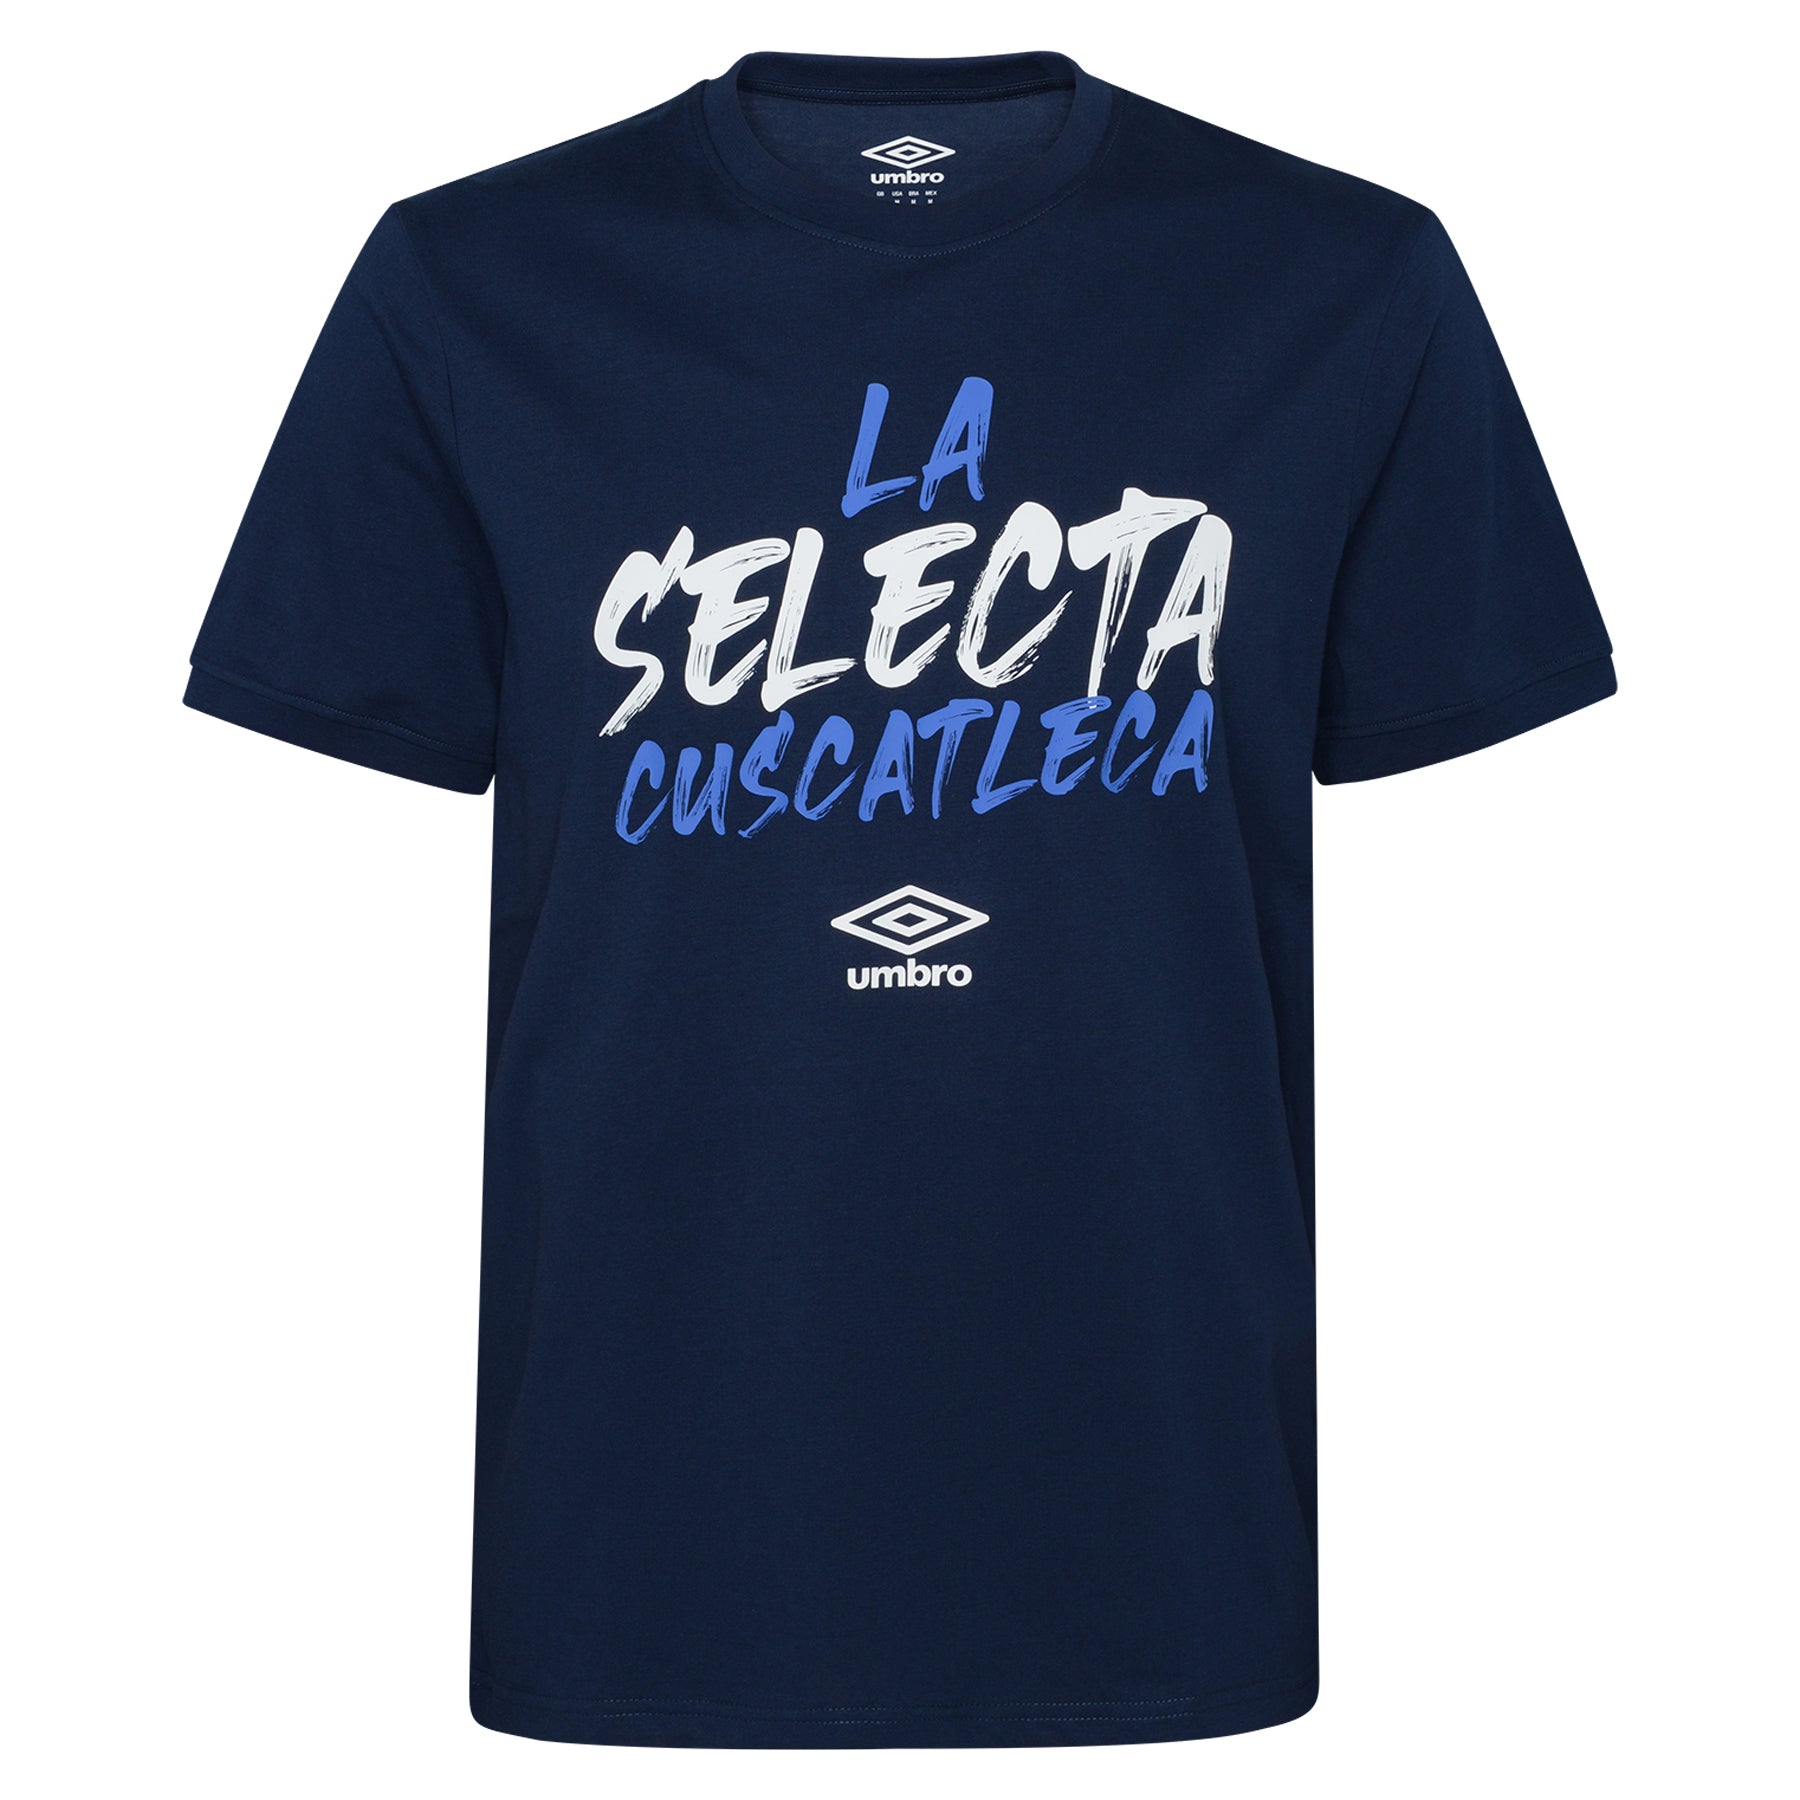 La Selecta Cuscatleca T-shirt